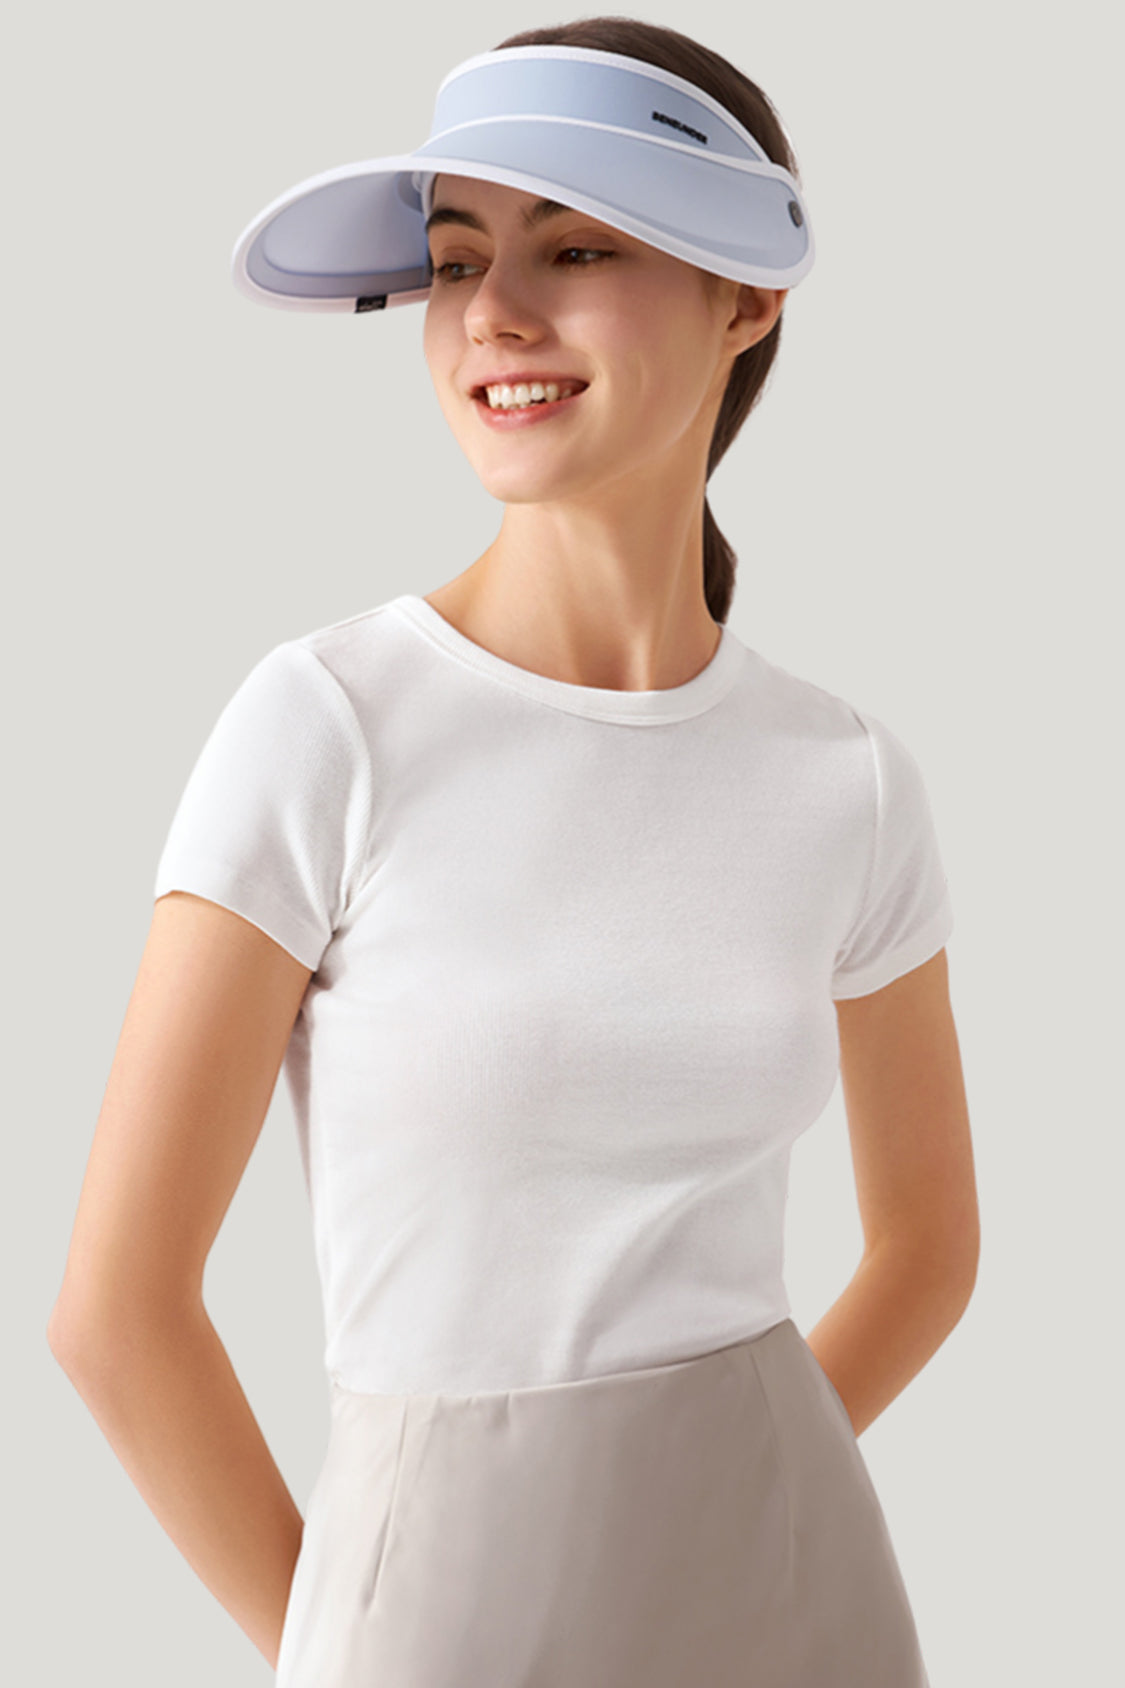 Beneunder Golf Sun Hats, UV Protection Hat for Women UPF50+ Moon Stone Gray